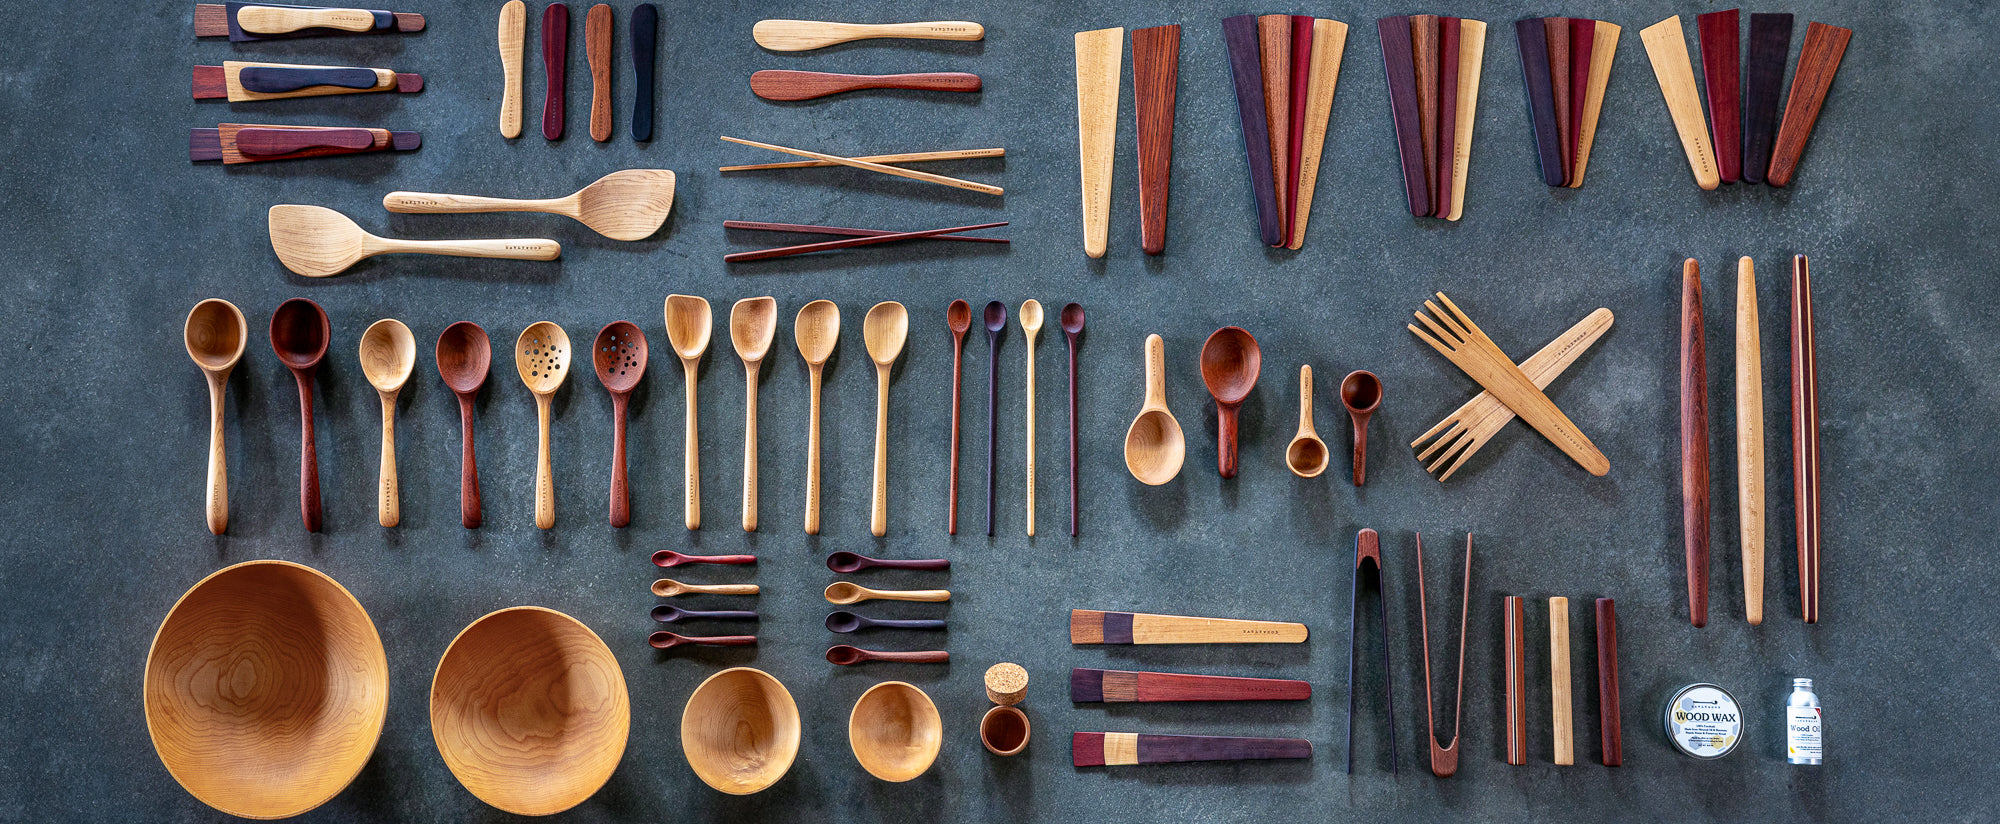 long handled wooden tasting spoon set - Earlywood